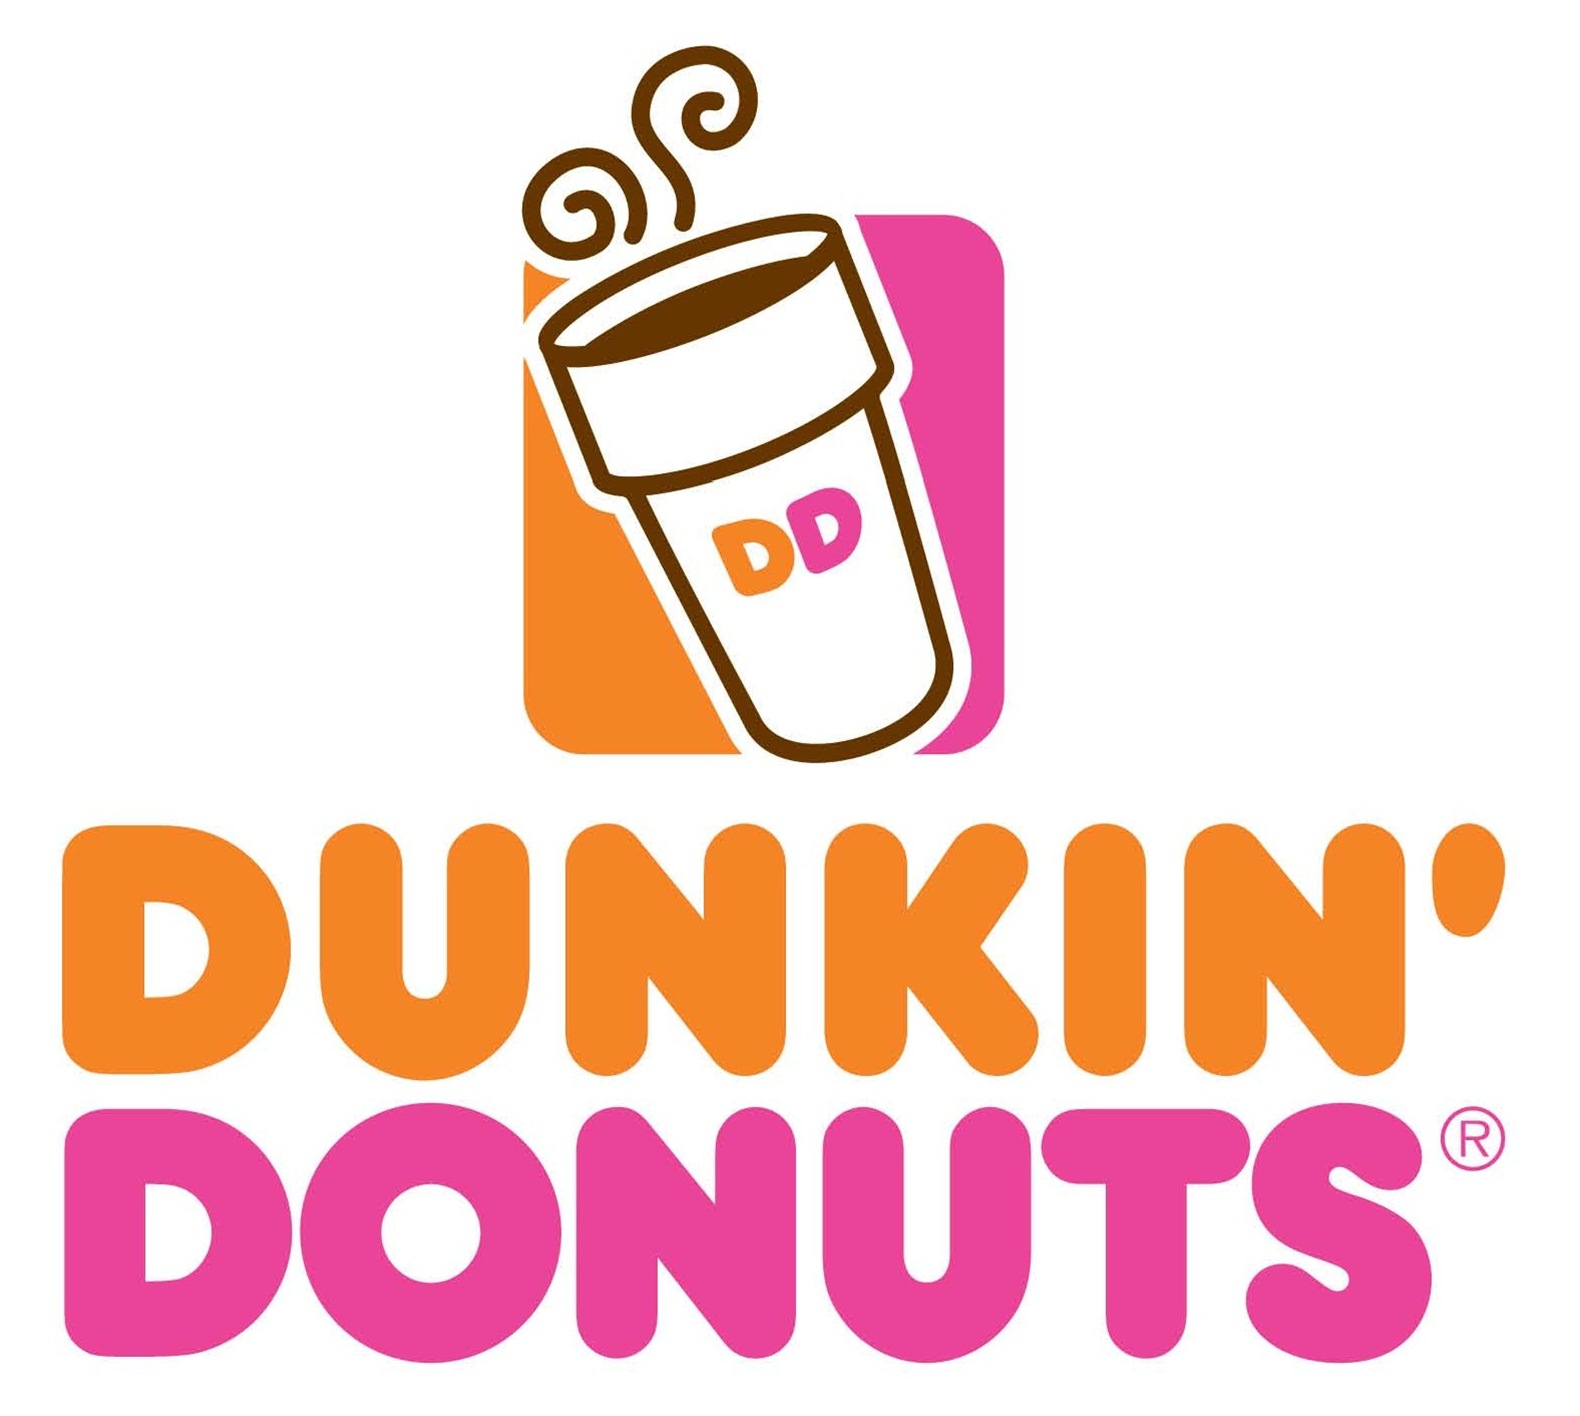 Dunkin Donuts Potential Development Program